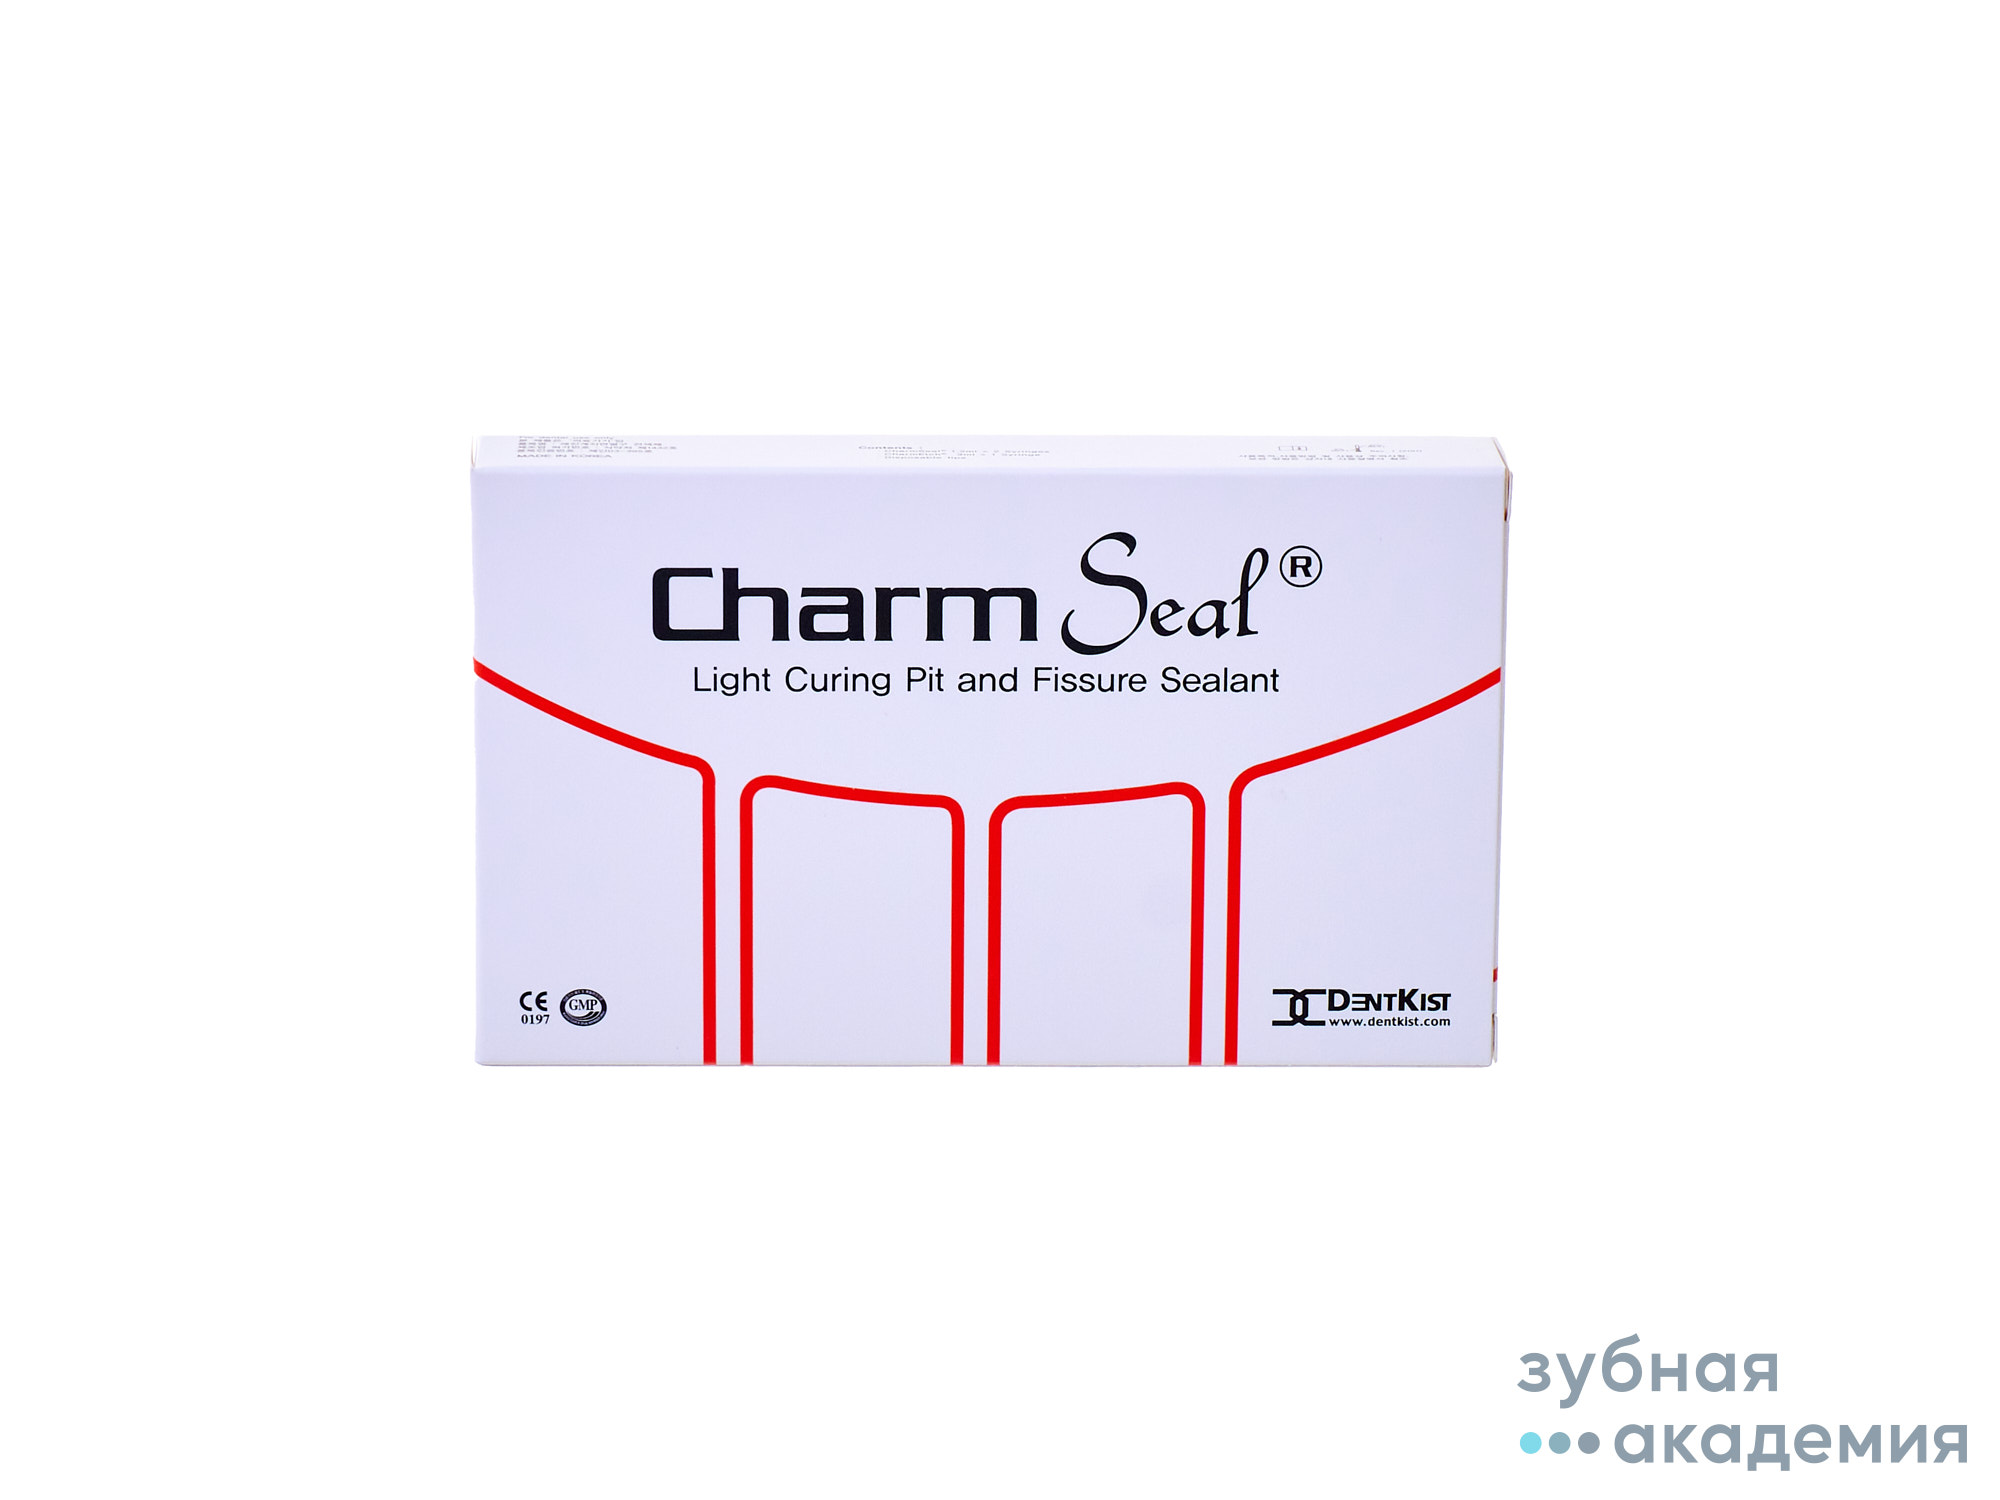 CharmSeal /ЧамСил  упаковка 2*1,2 мл+протравка 3 мл/DentKist, Корея.